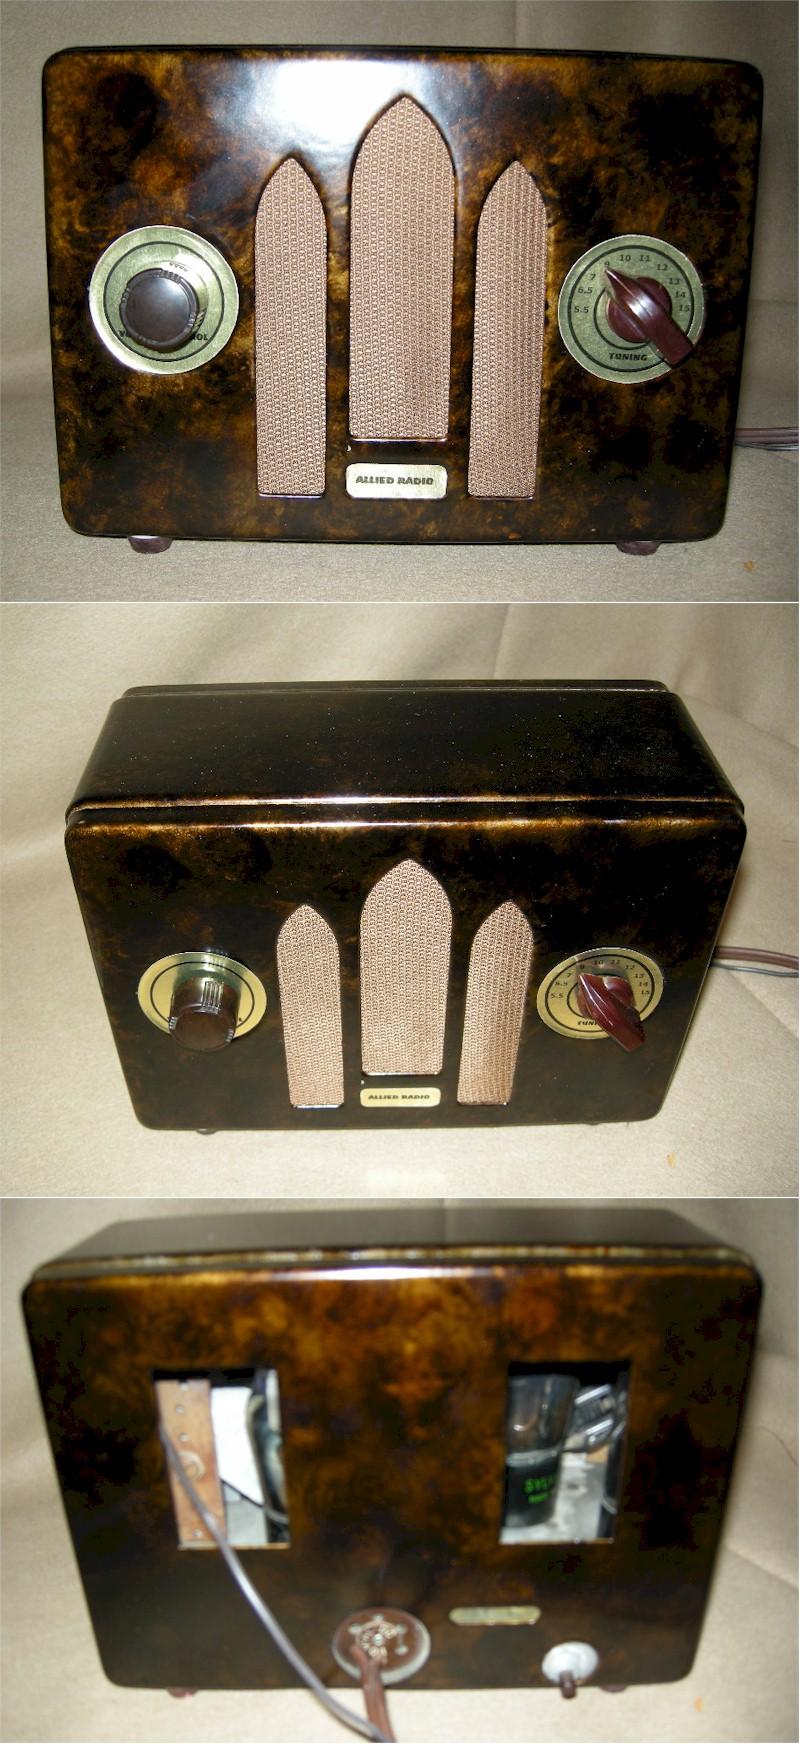 Allied Radio (Unknown Model)